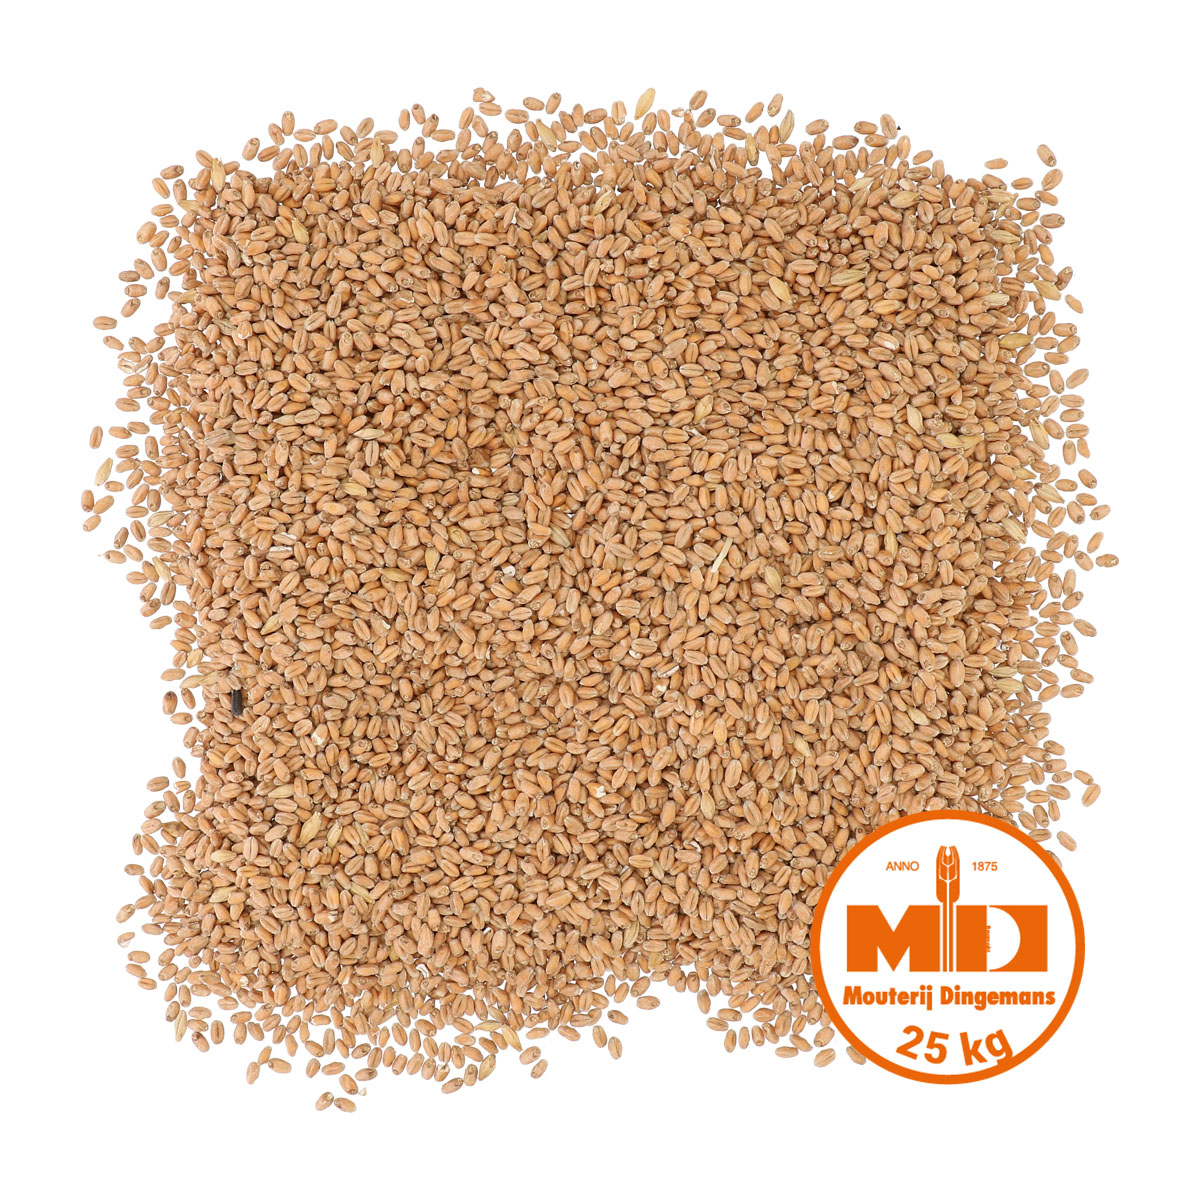 Dingemans Wheat MD™ 25 kg